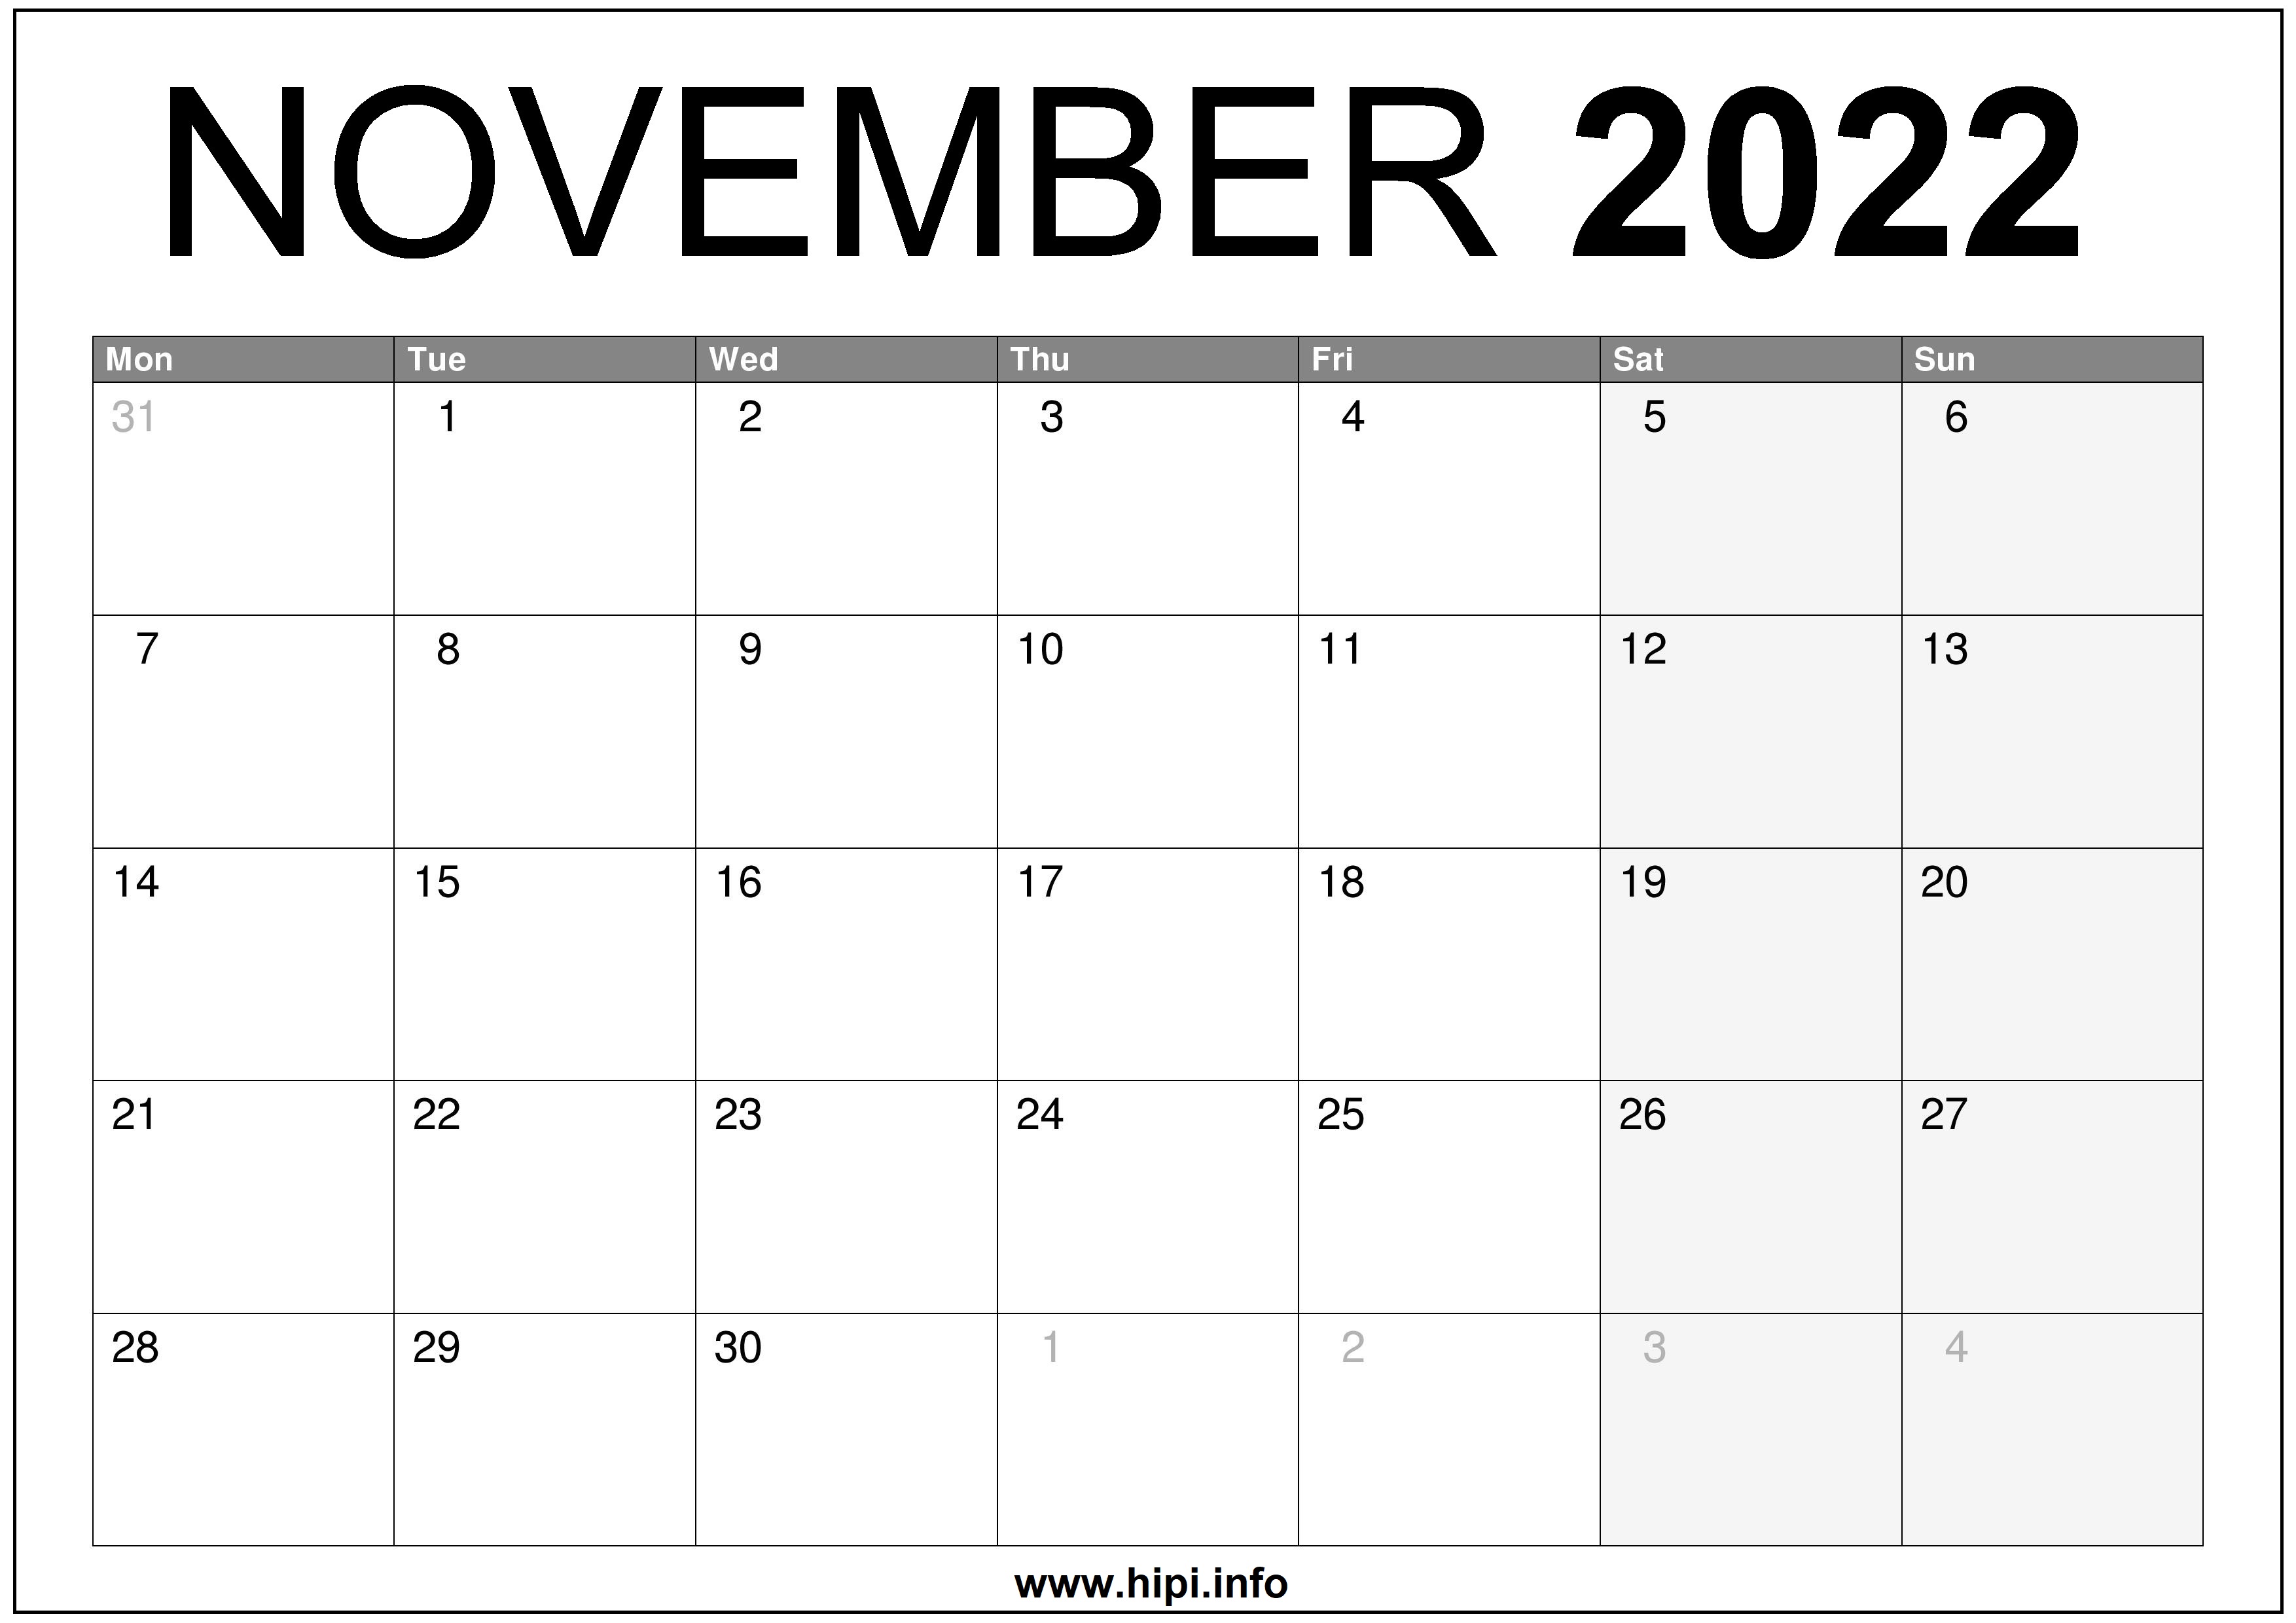 Free Printable Calendar November 2022 November 2022 Uk Calendar Printable Free - Hipi.info | Calendars Printable  Free